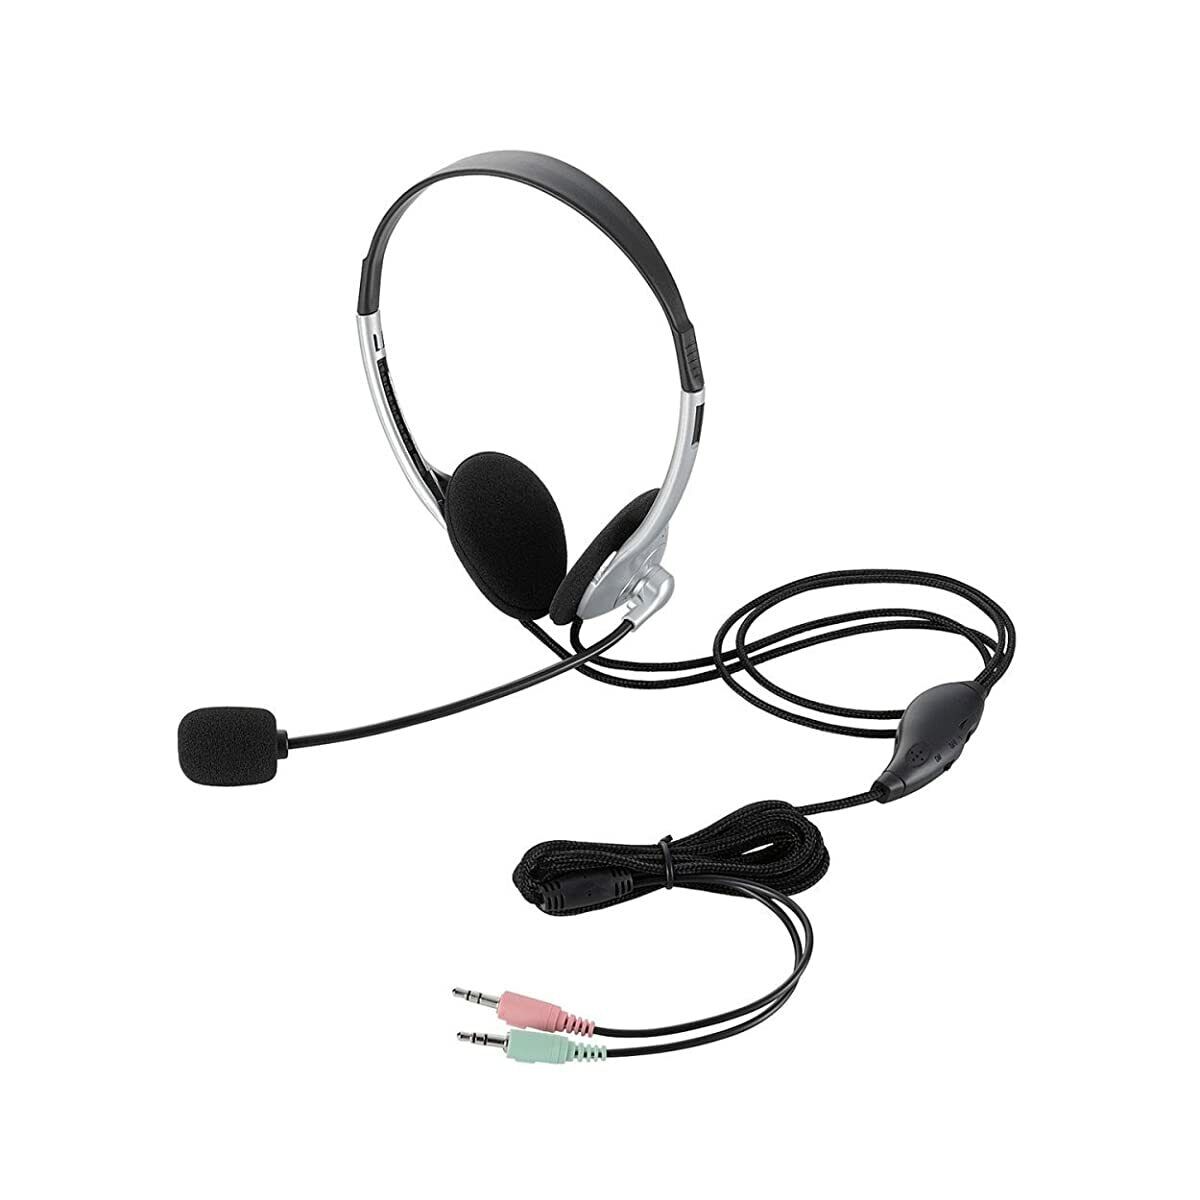 Elecom headset (both ears small overhead type) HS-HP22SV